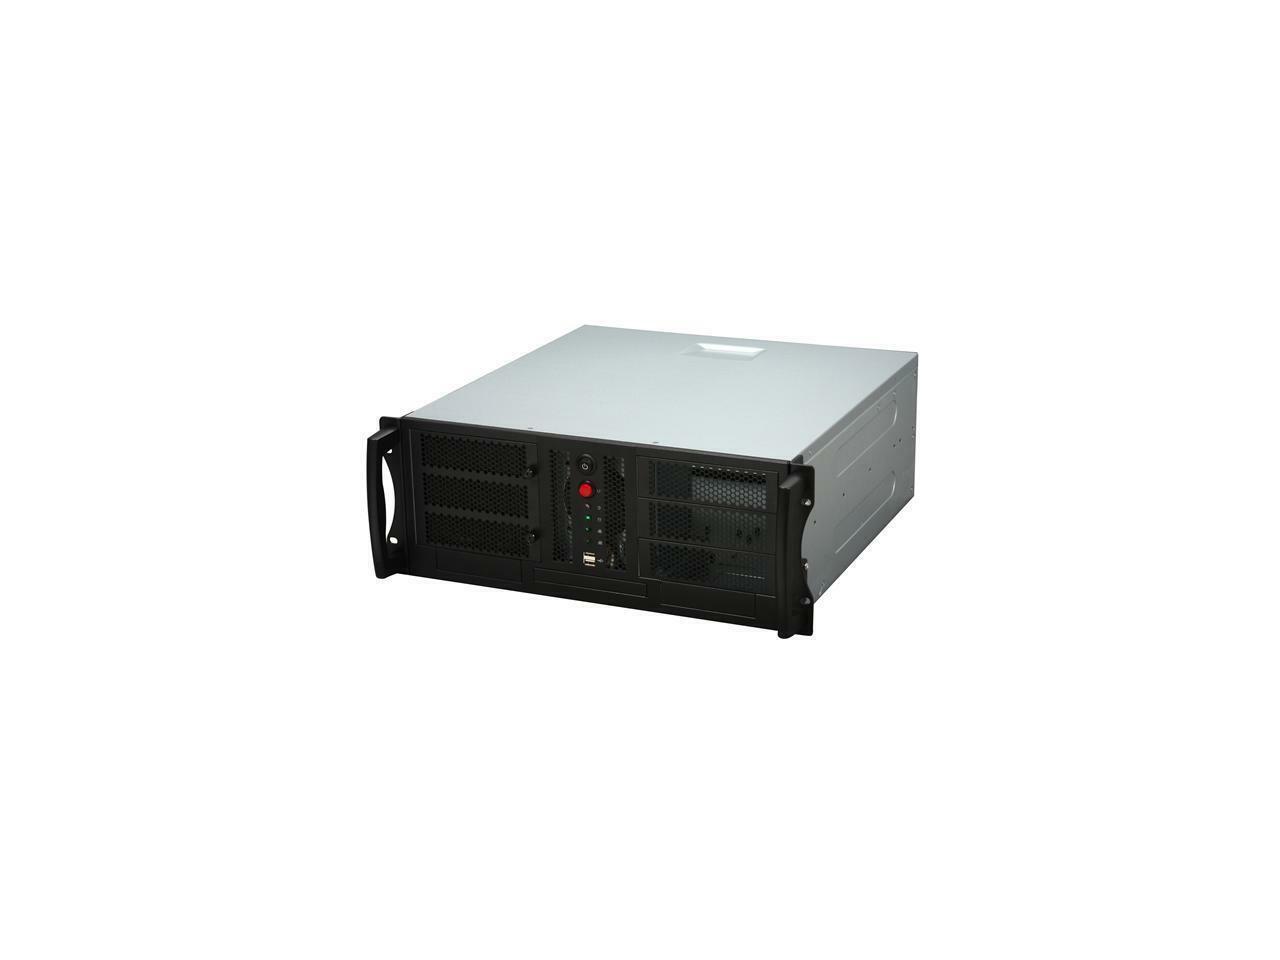 CHENBRO RM42300-F 1.2 mm SGCC 4U Rackmount Server Case